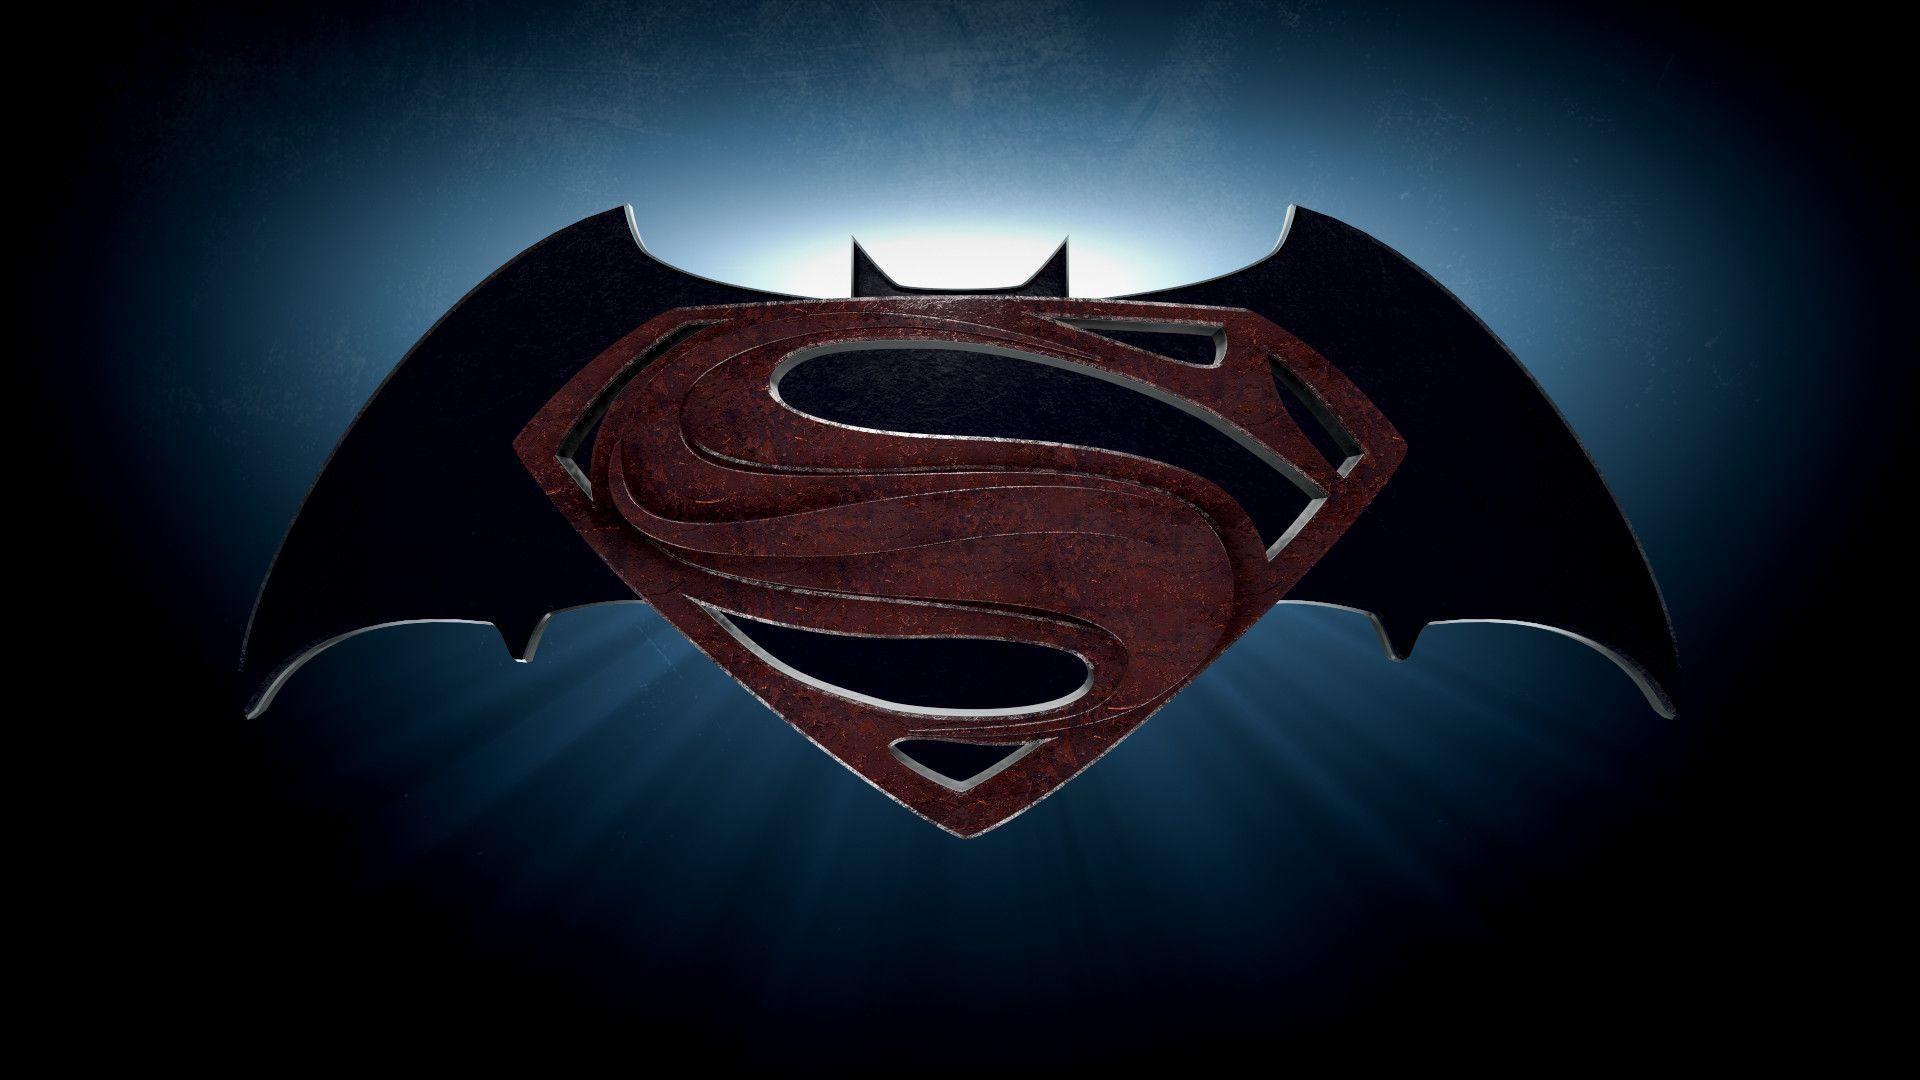 Image For > Batman Vs Superman Logo 2015